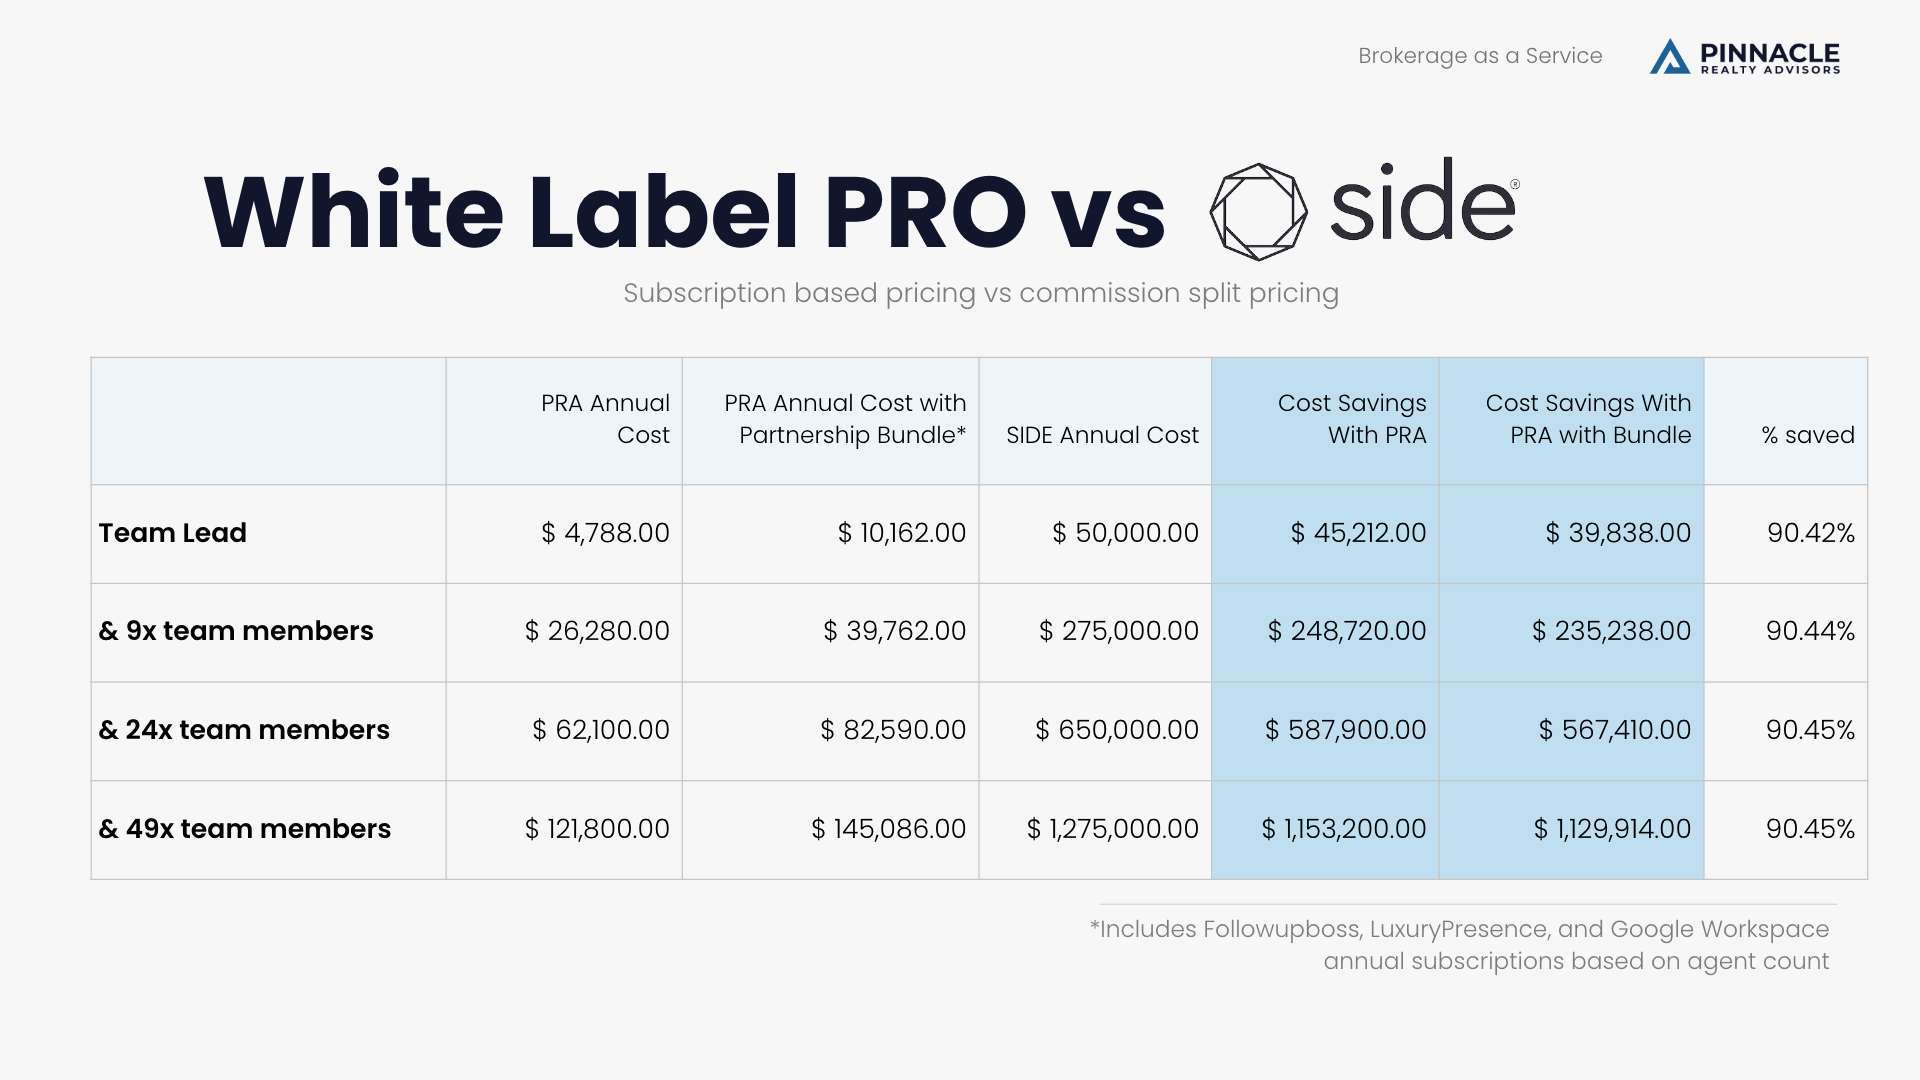 Pinnacle Realrt Advisors white label pro plan comparison vs Side